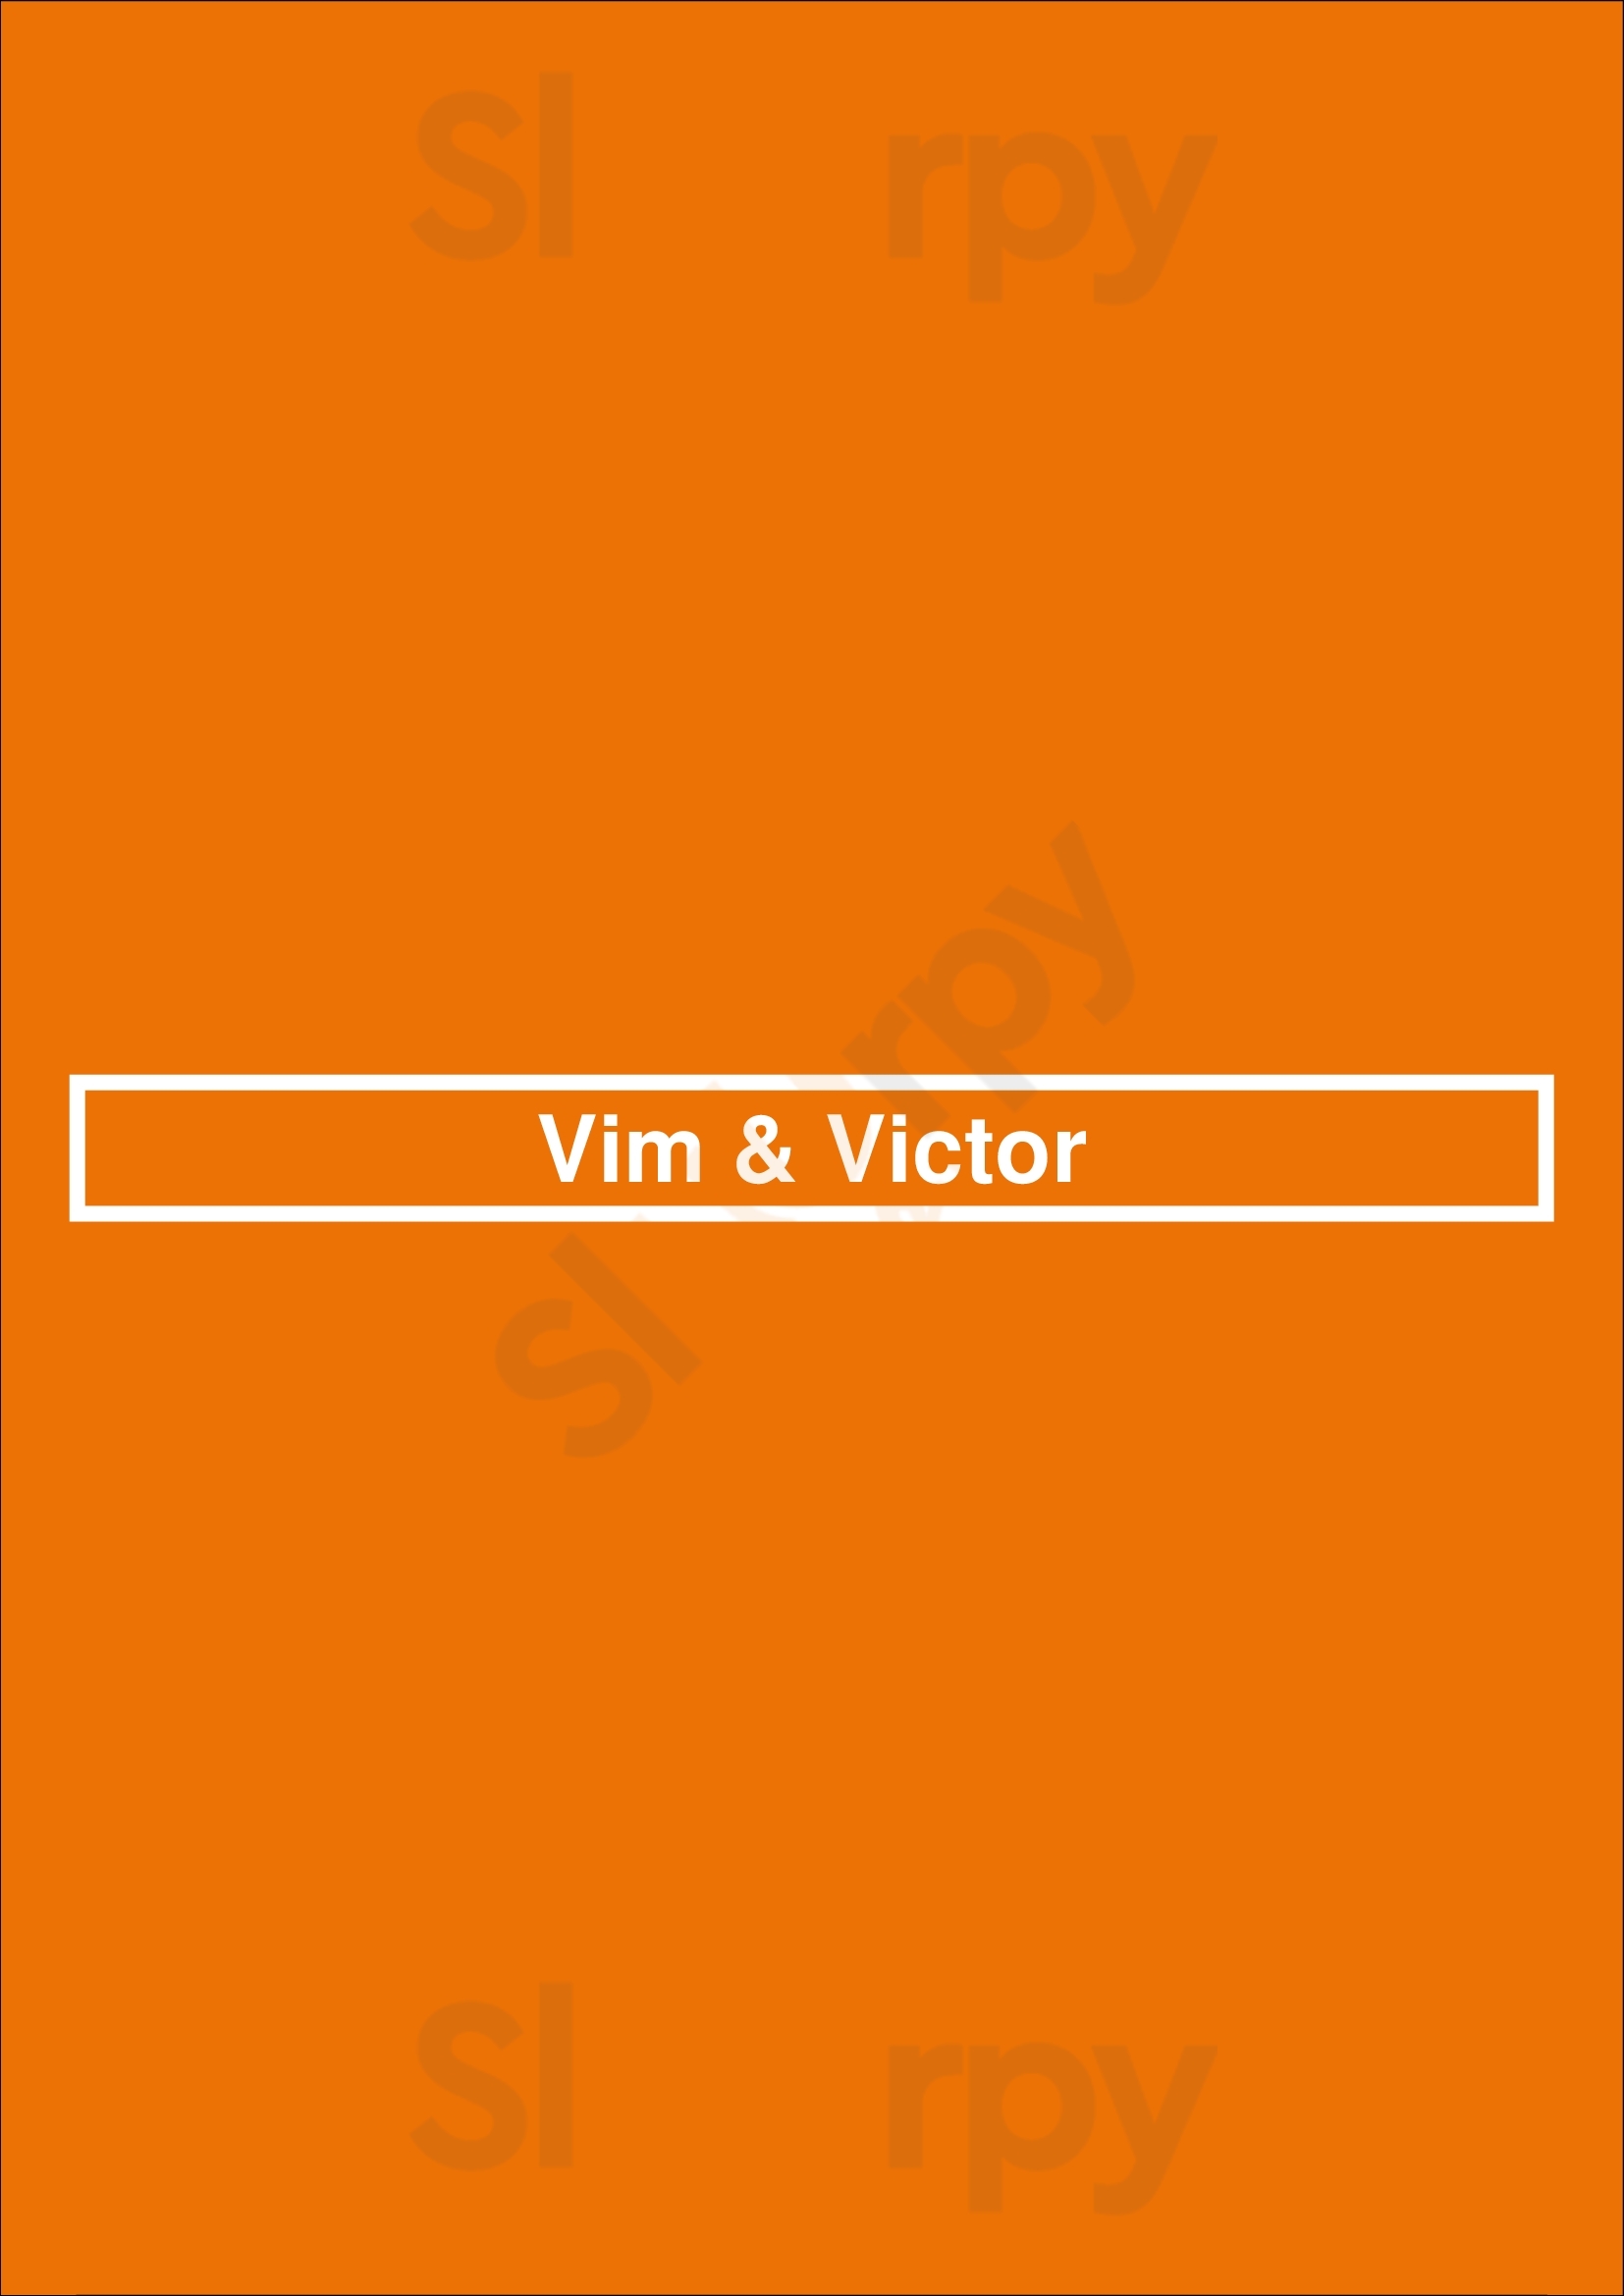 Vim & Victor Springfield Menu - 1